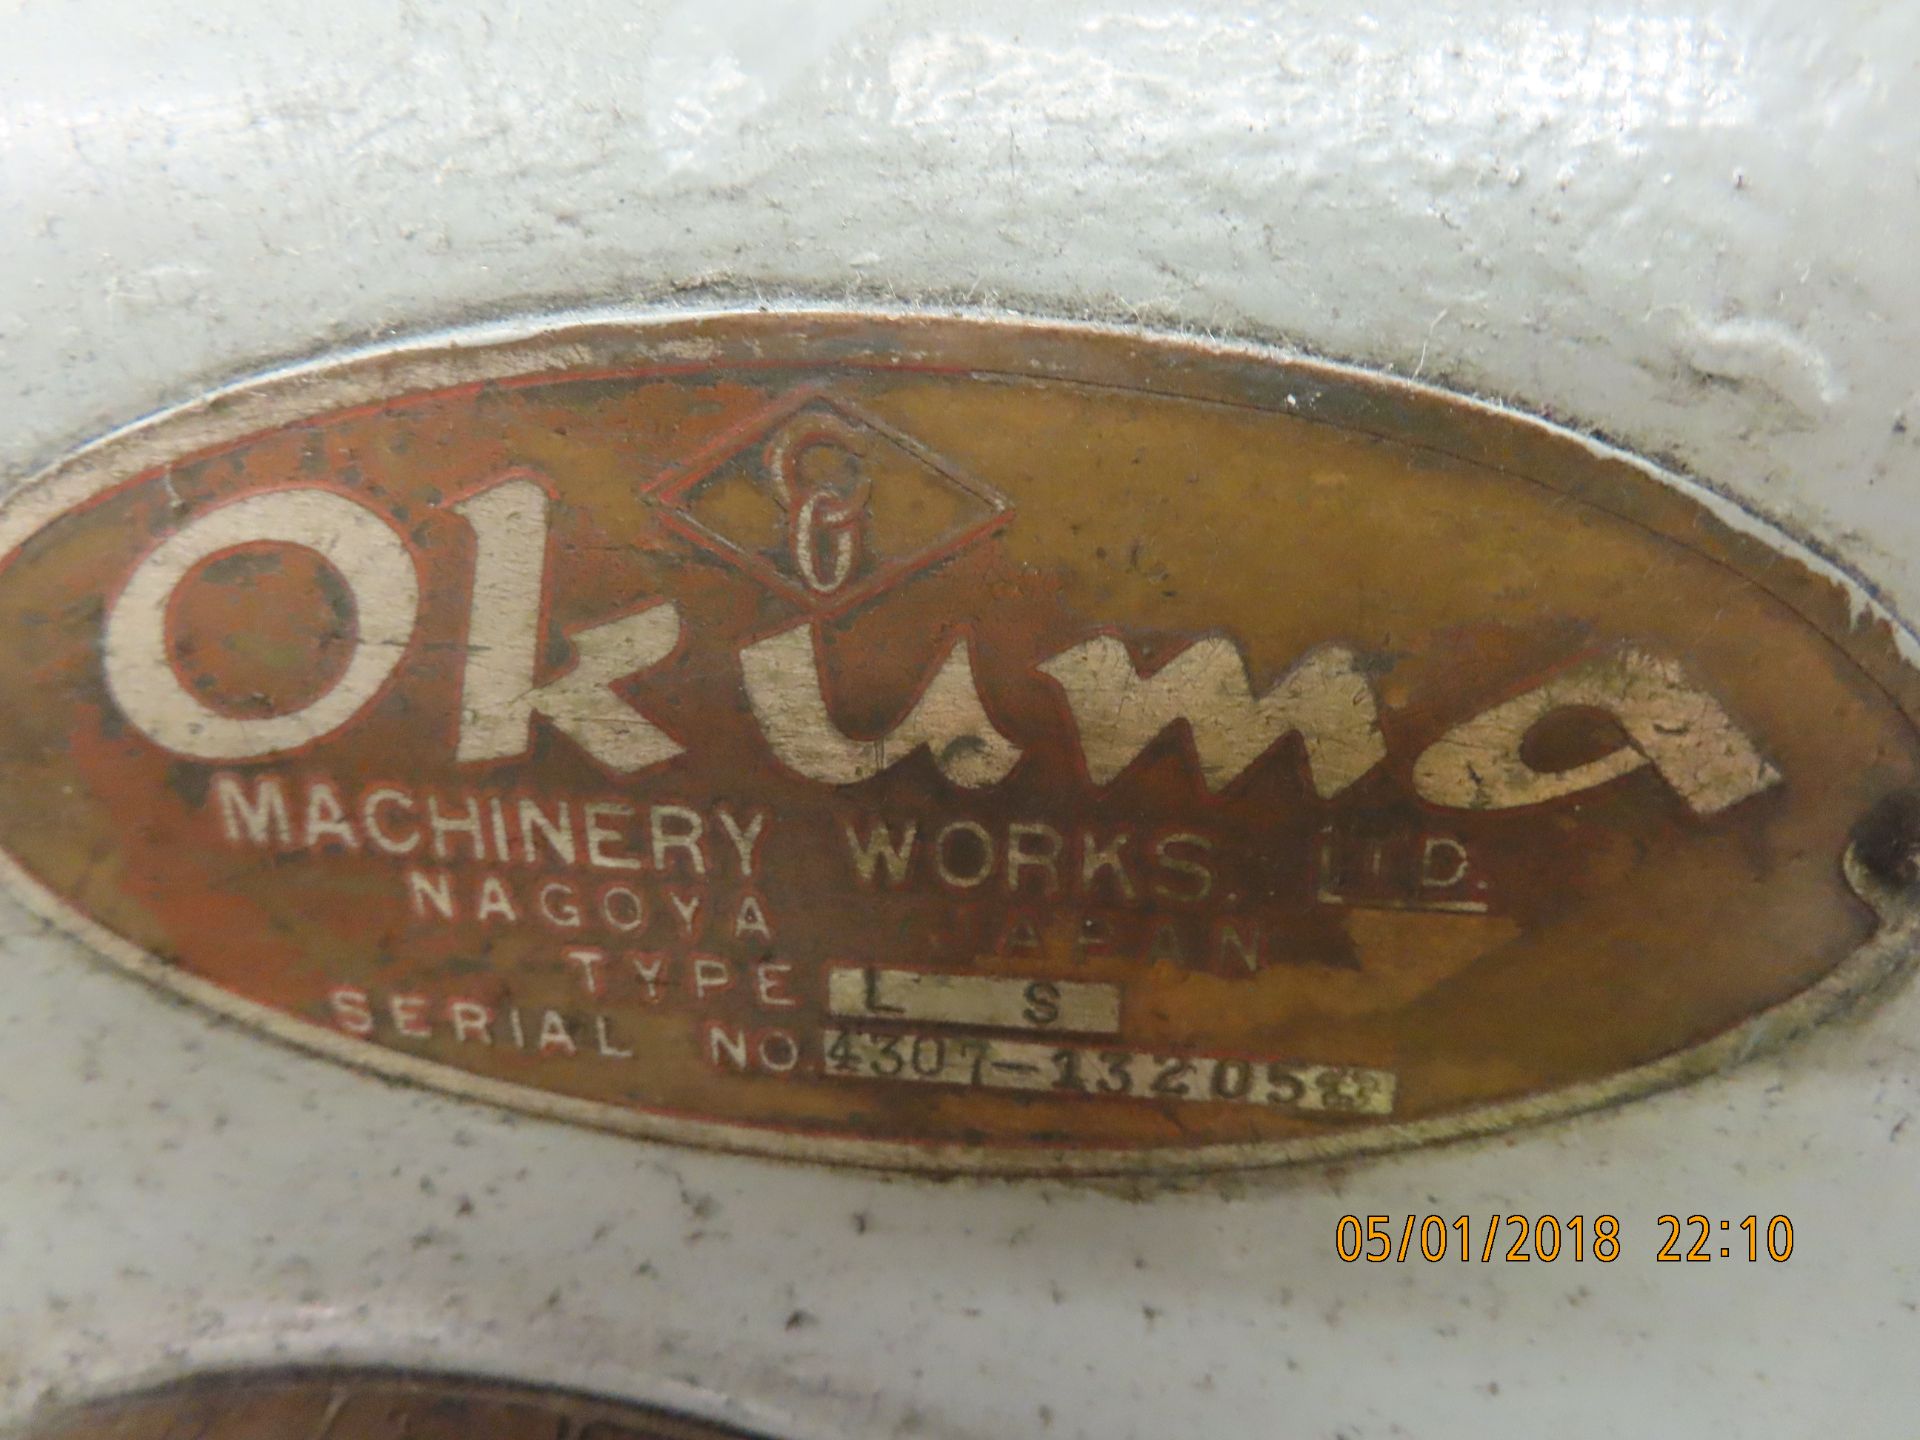 Okuma Lathe LS21X51 w/ 3-Jaw Chuck Steady Rest S/N 4307-13205540-1500/21''-59 (LOADING FEES: $250) - Image 3 of 3